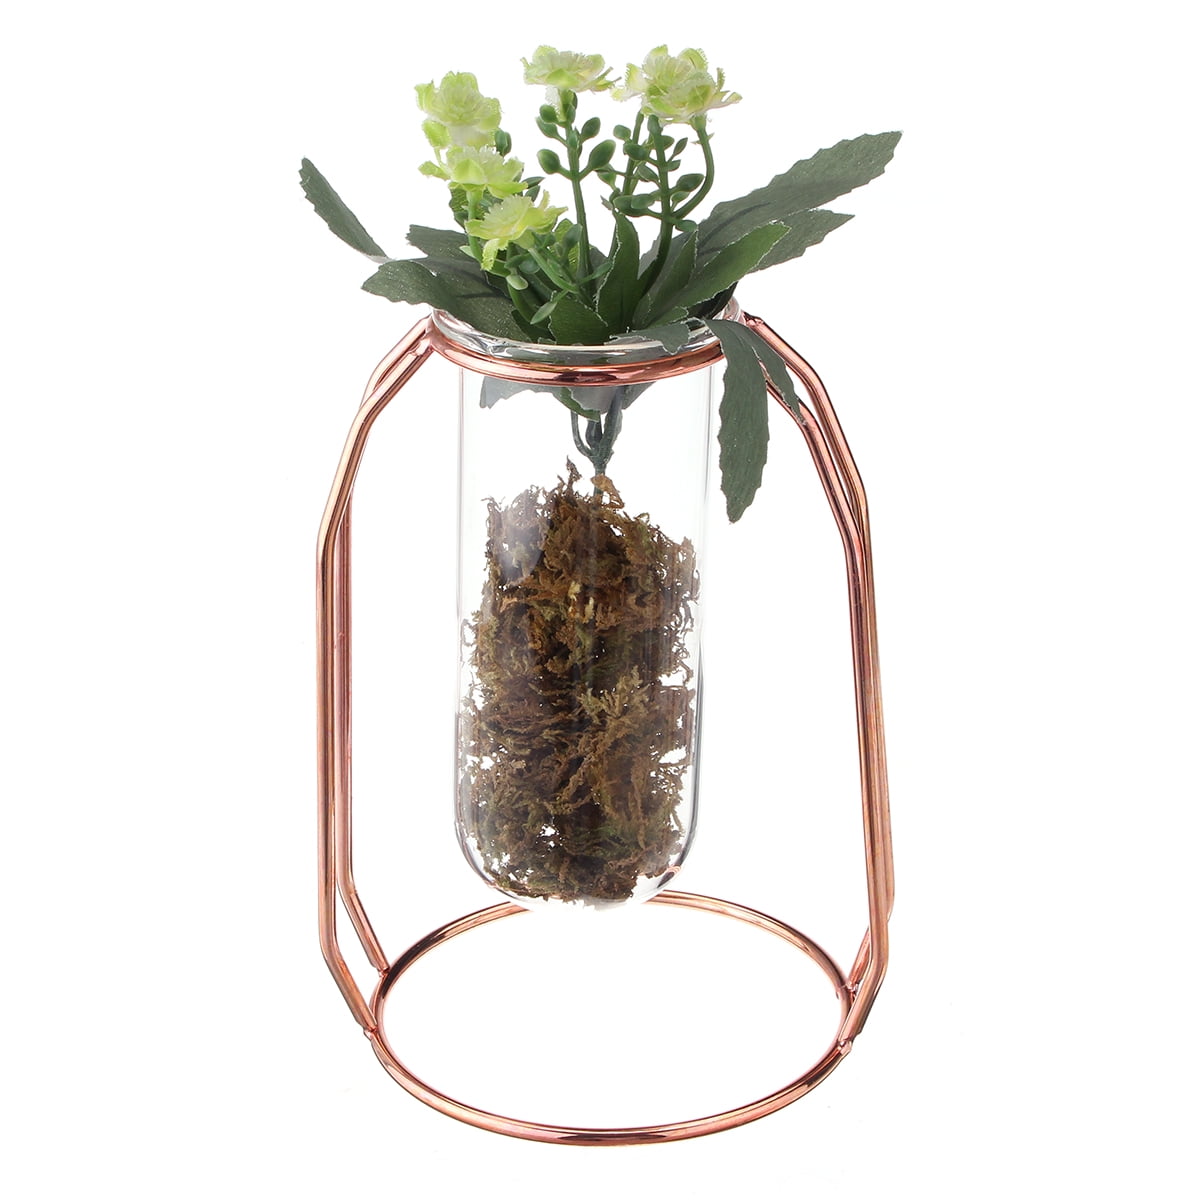 Fruit Shaped Glass Plant Flower Vase Holder Terrarium Container Home Decor Party